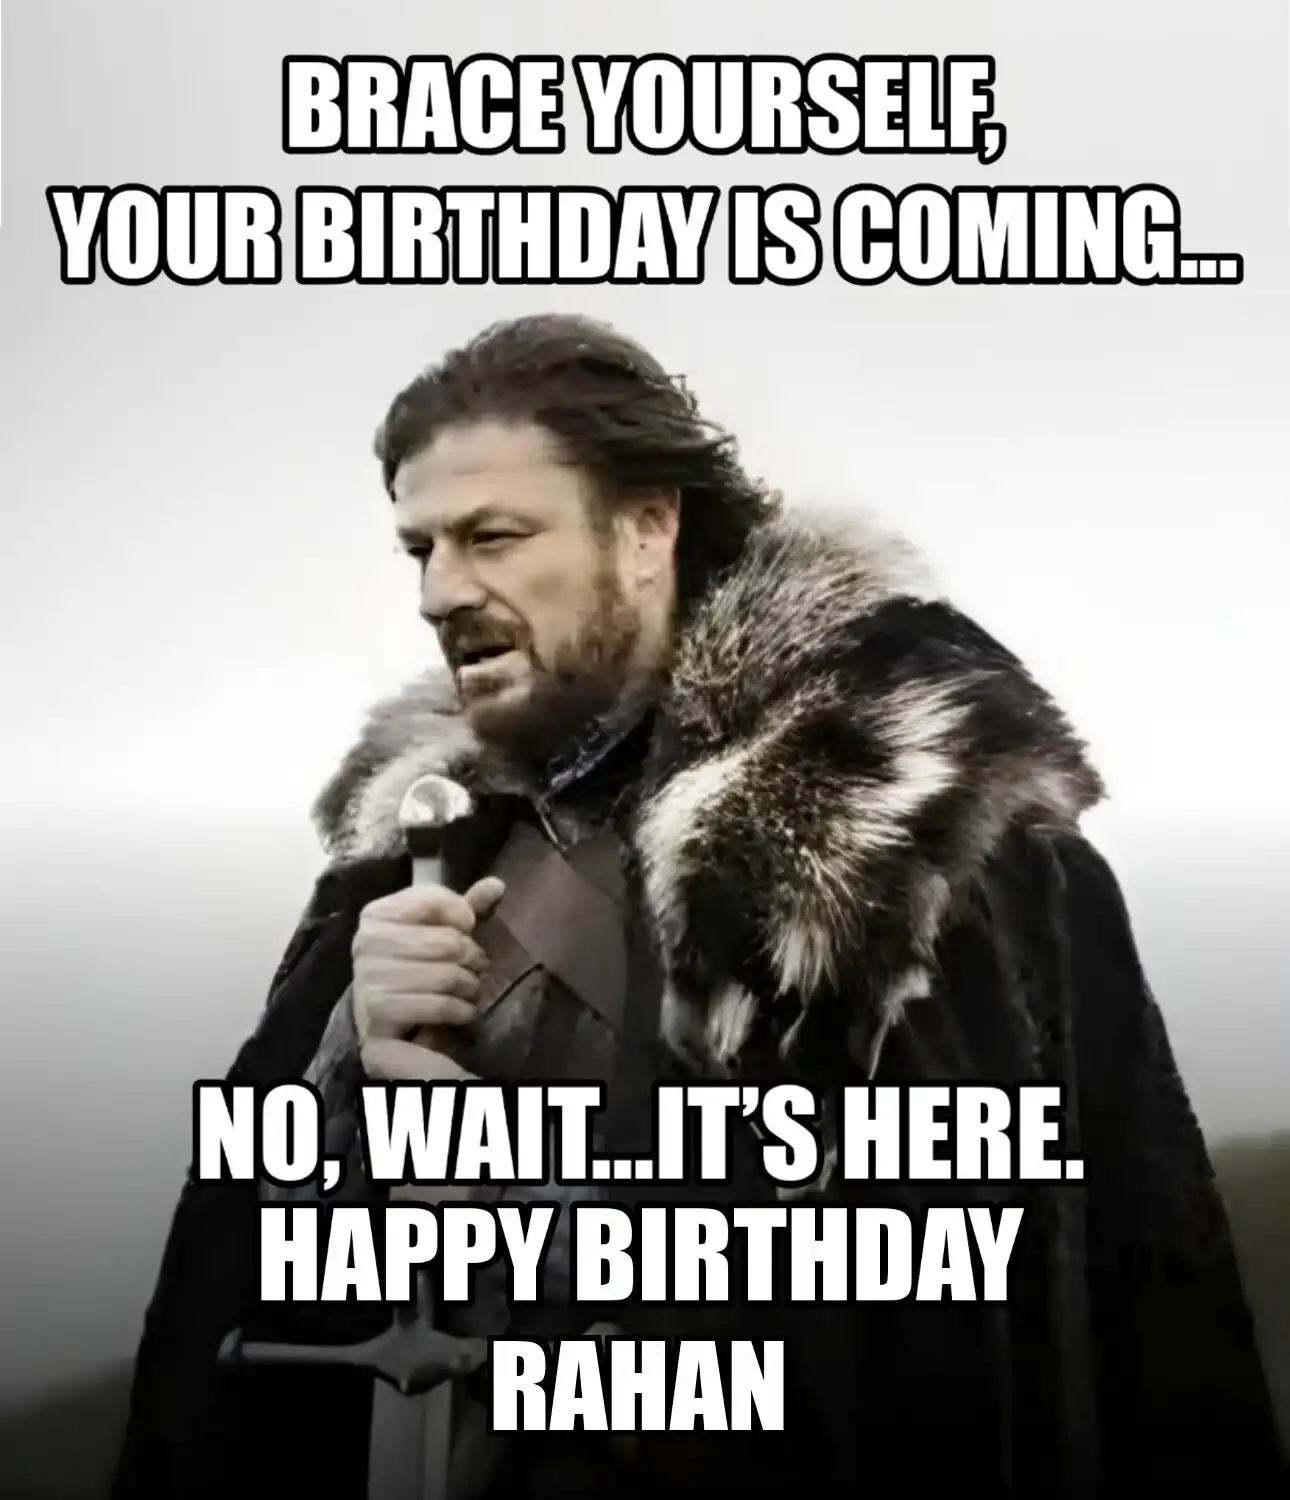 Happy Birthday Rahan Brace Yourself Your Birthday Is Coming Meme